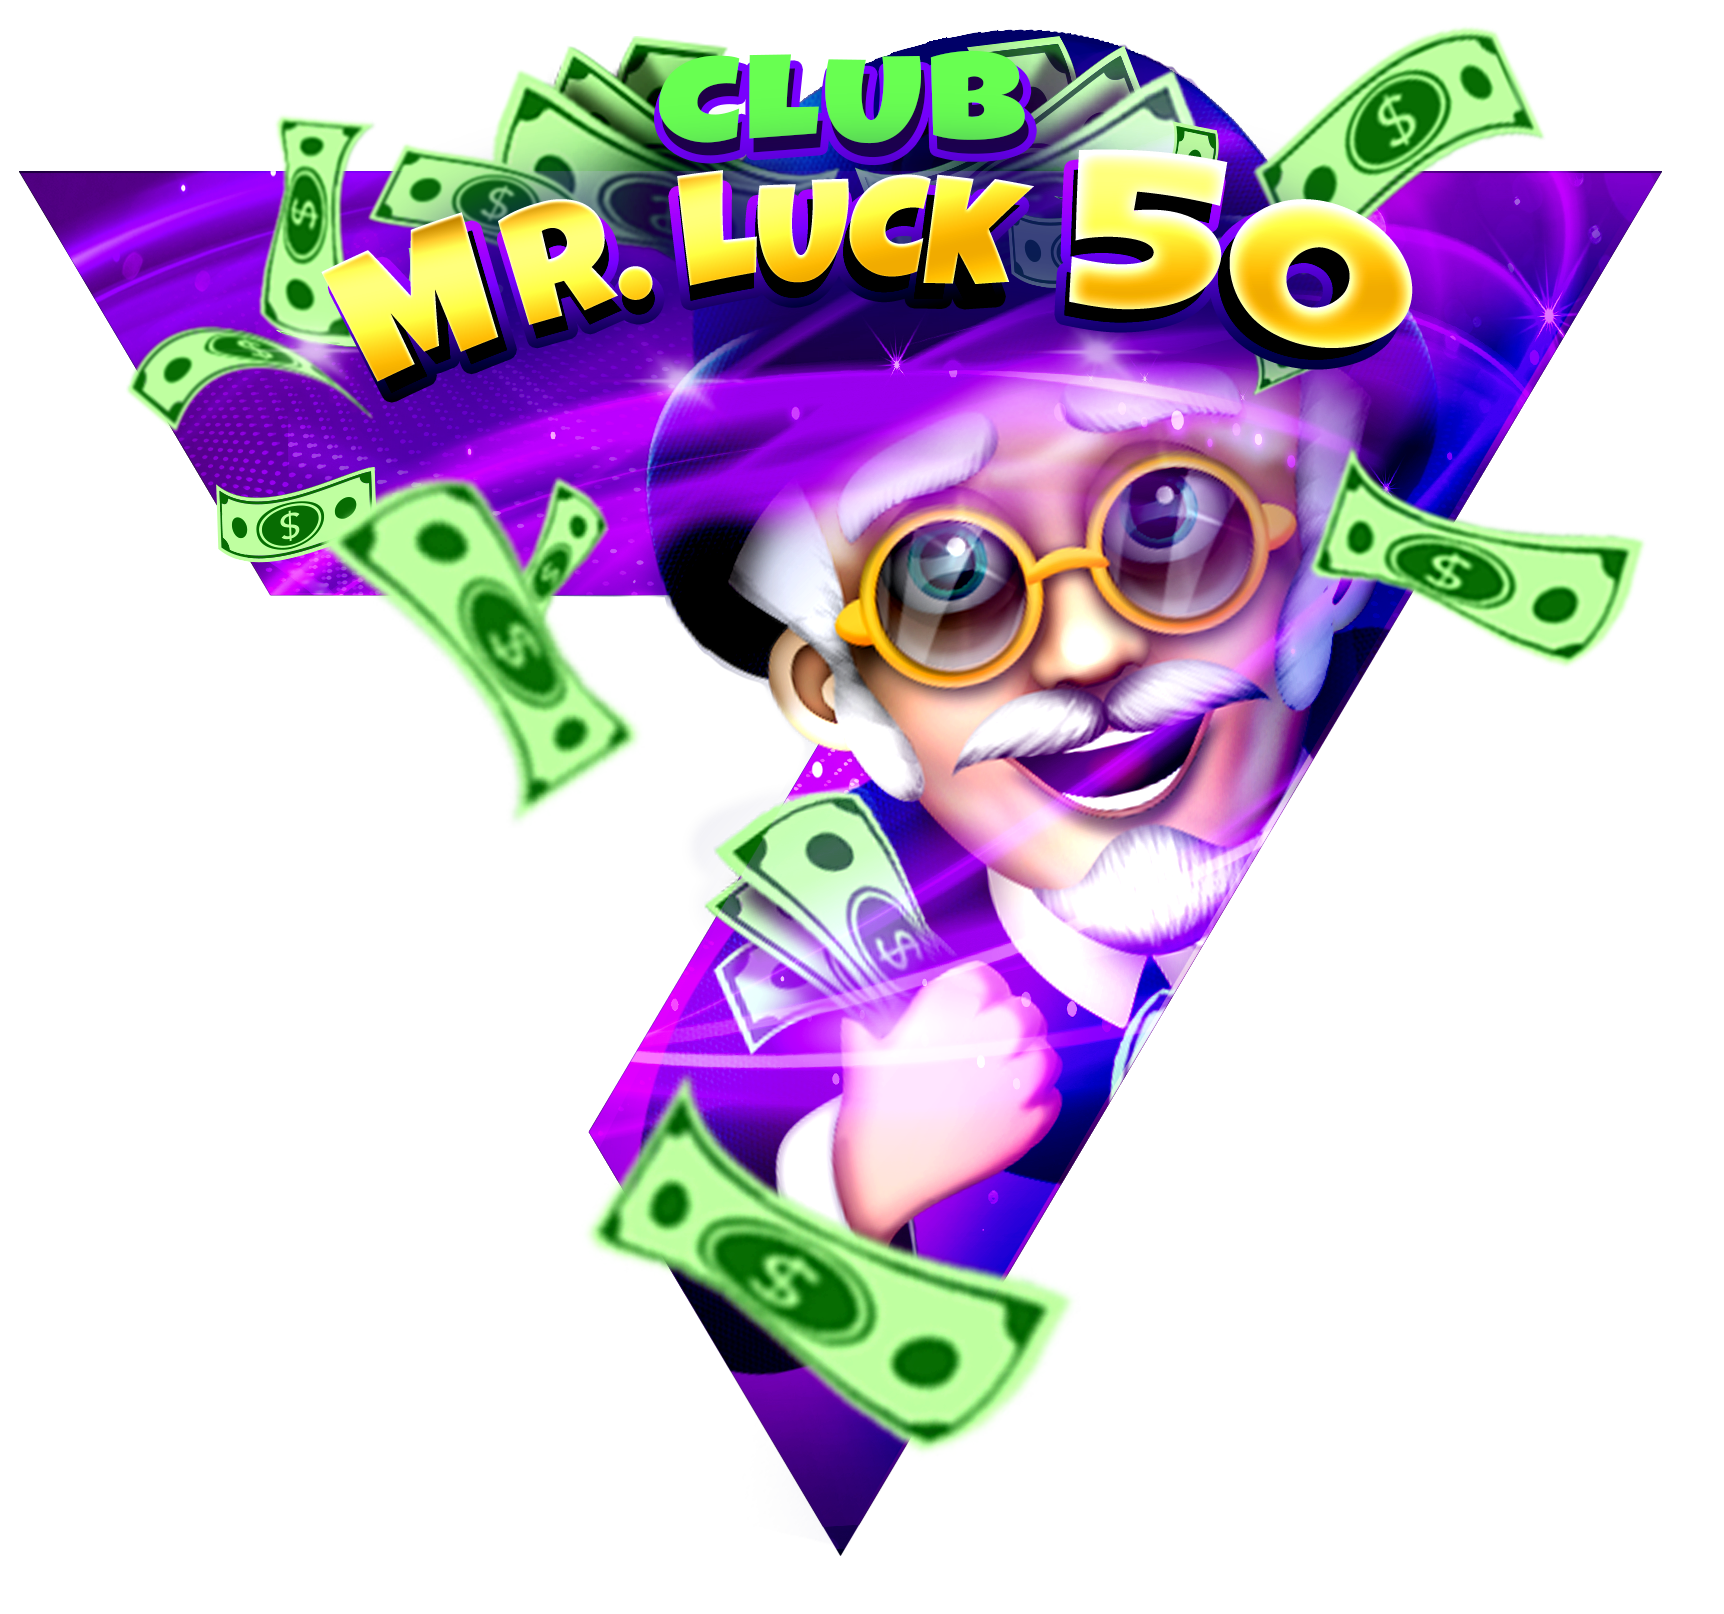 Club Mr.Luck 50